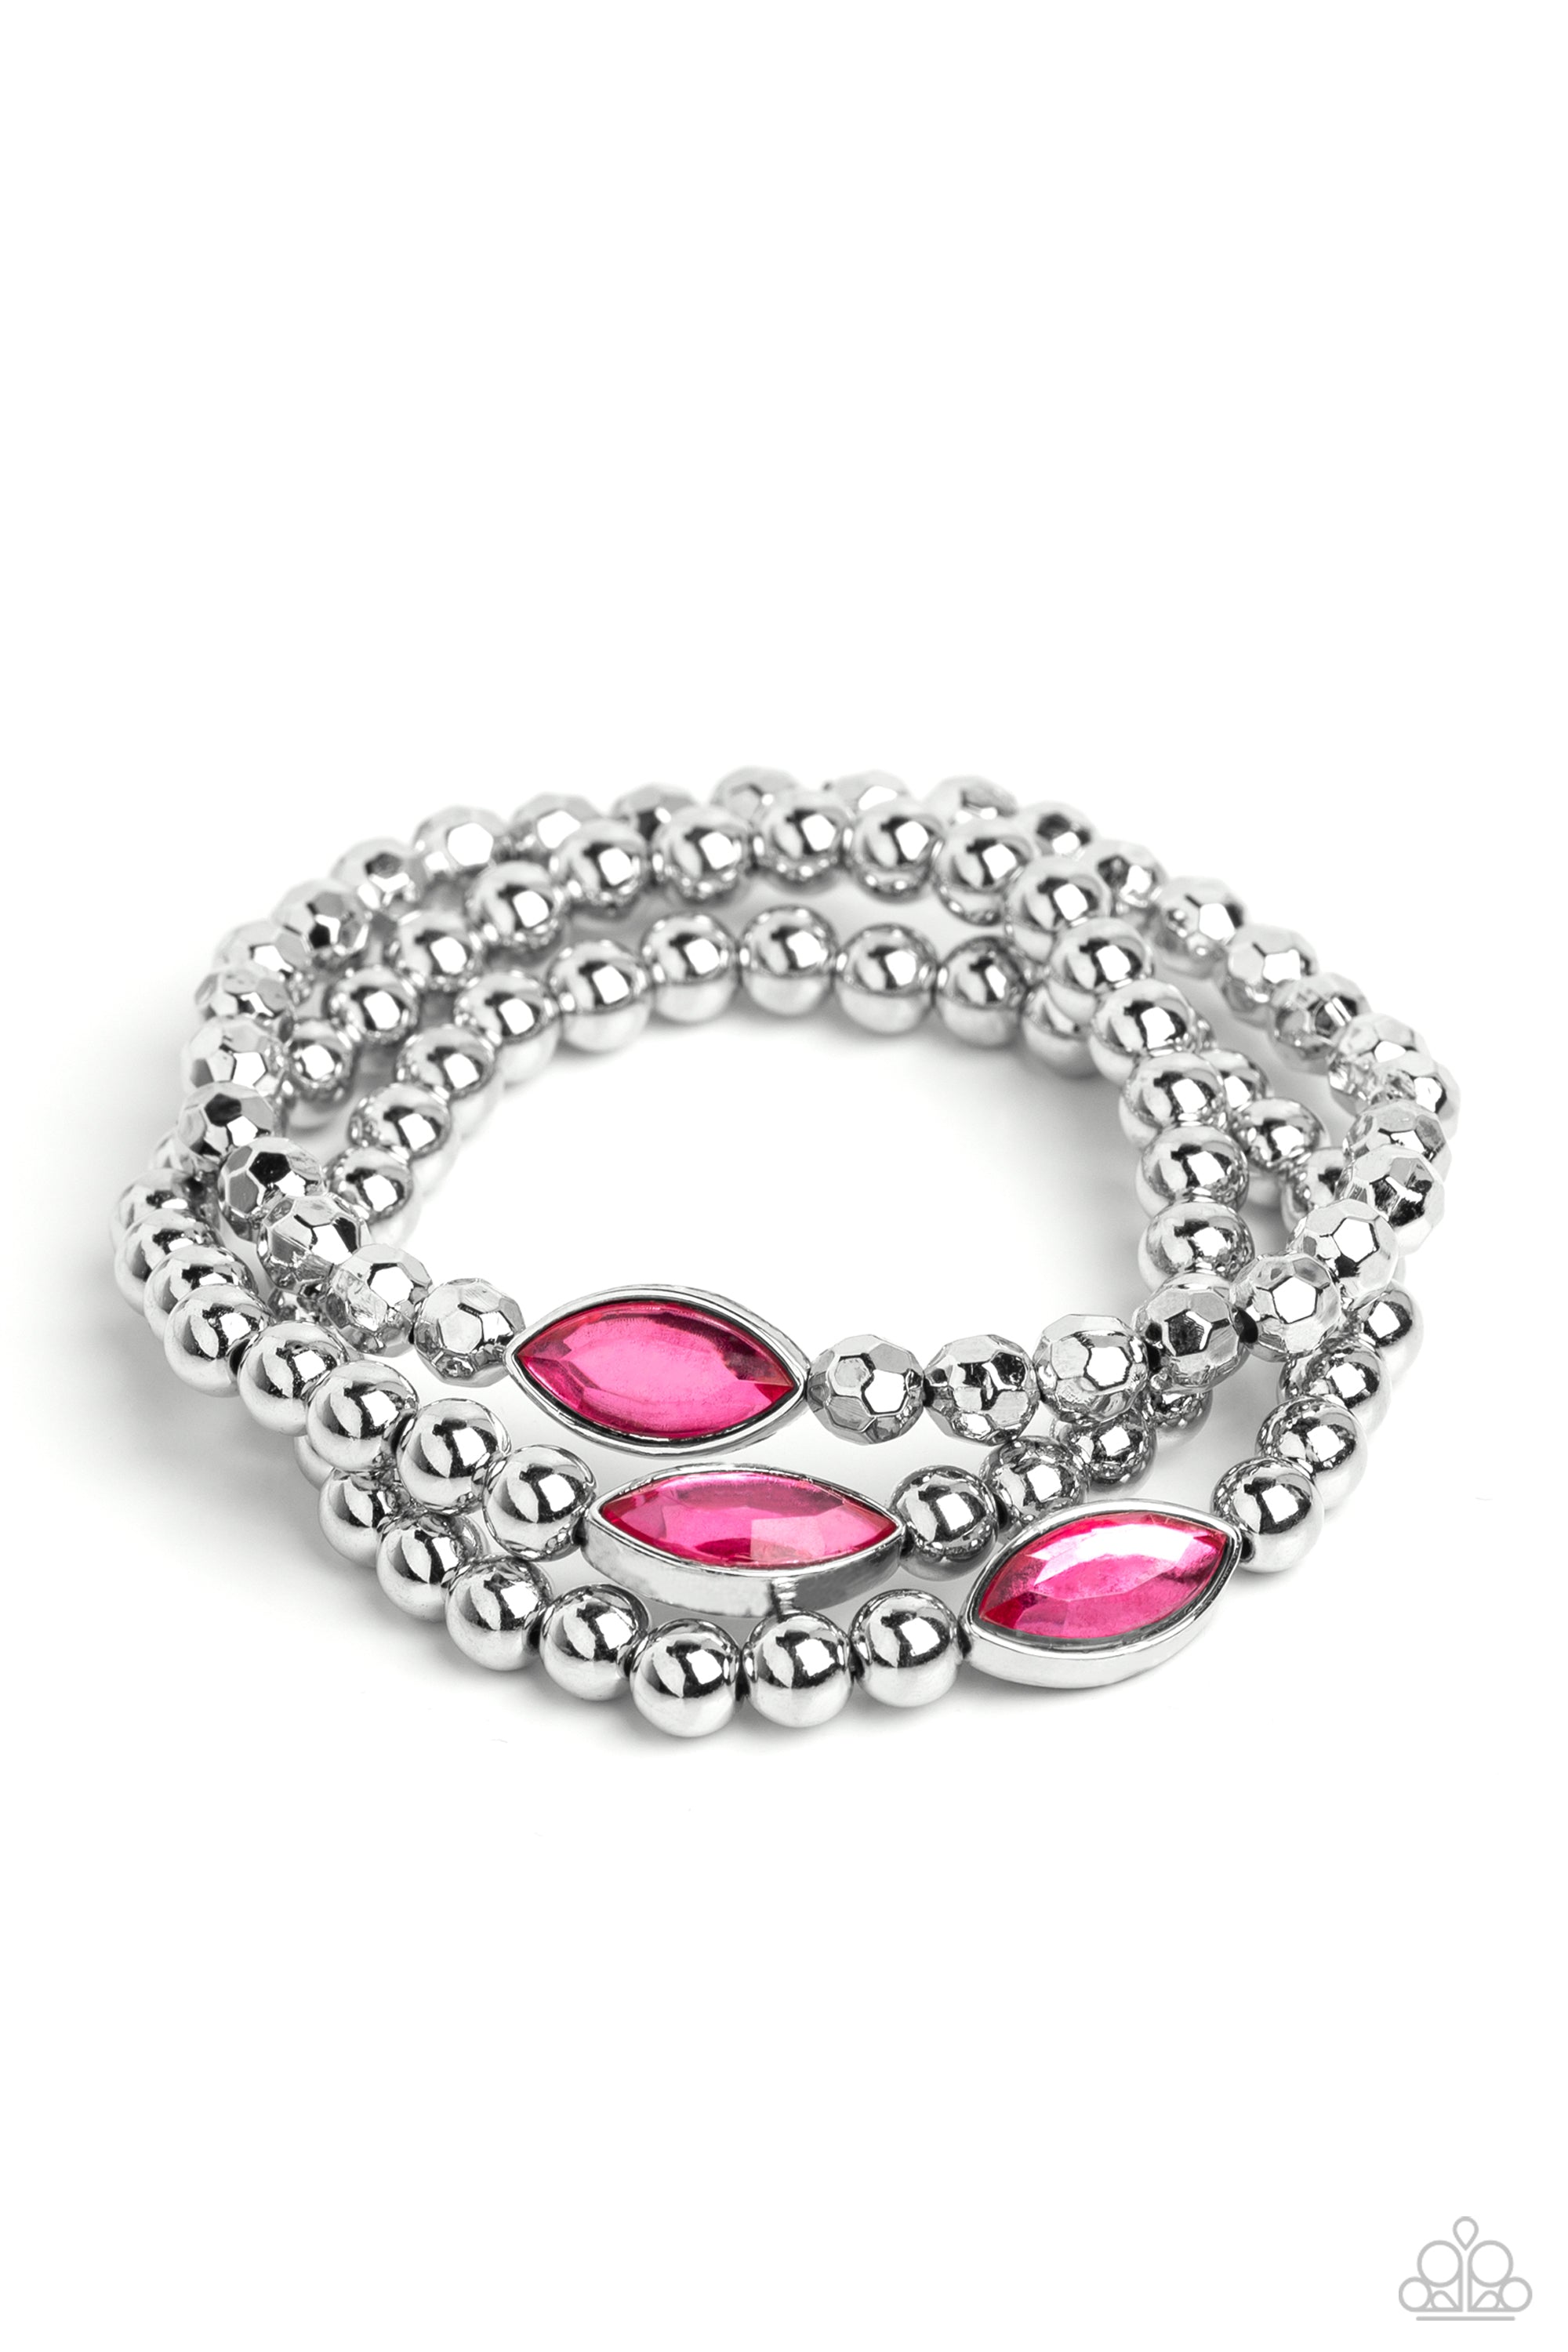 Twinkling Team Pink Bracelet - Paparazzi Accessories- lightbox - CarasShop.com - $5 Jewelry by Cara Jewels